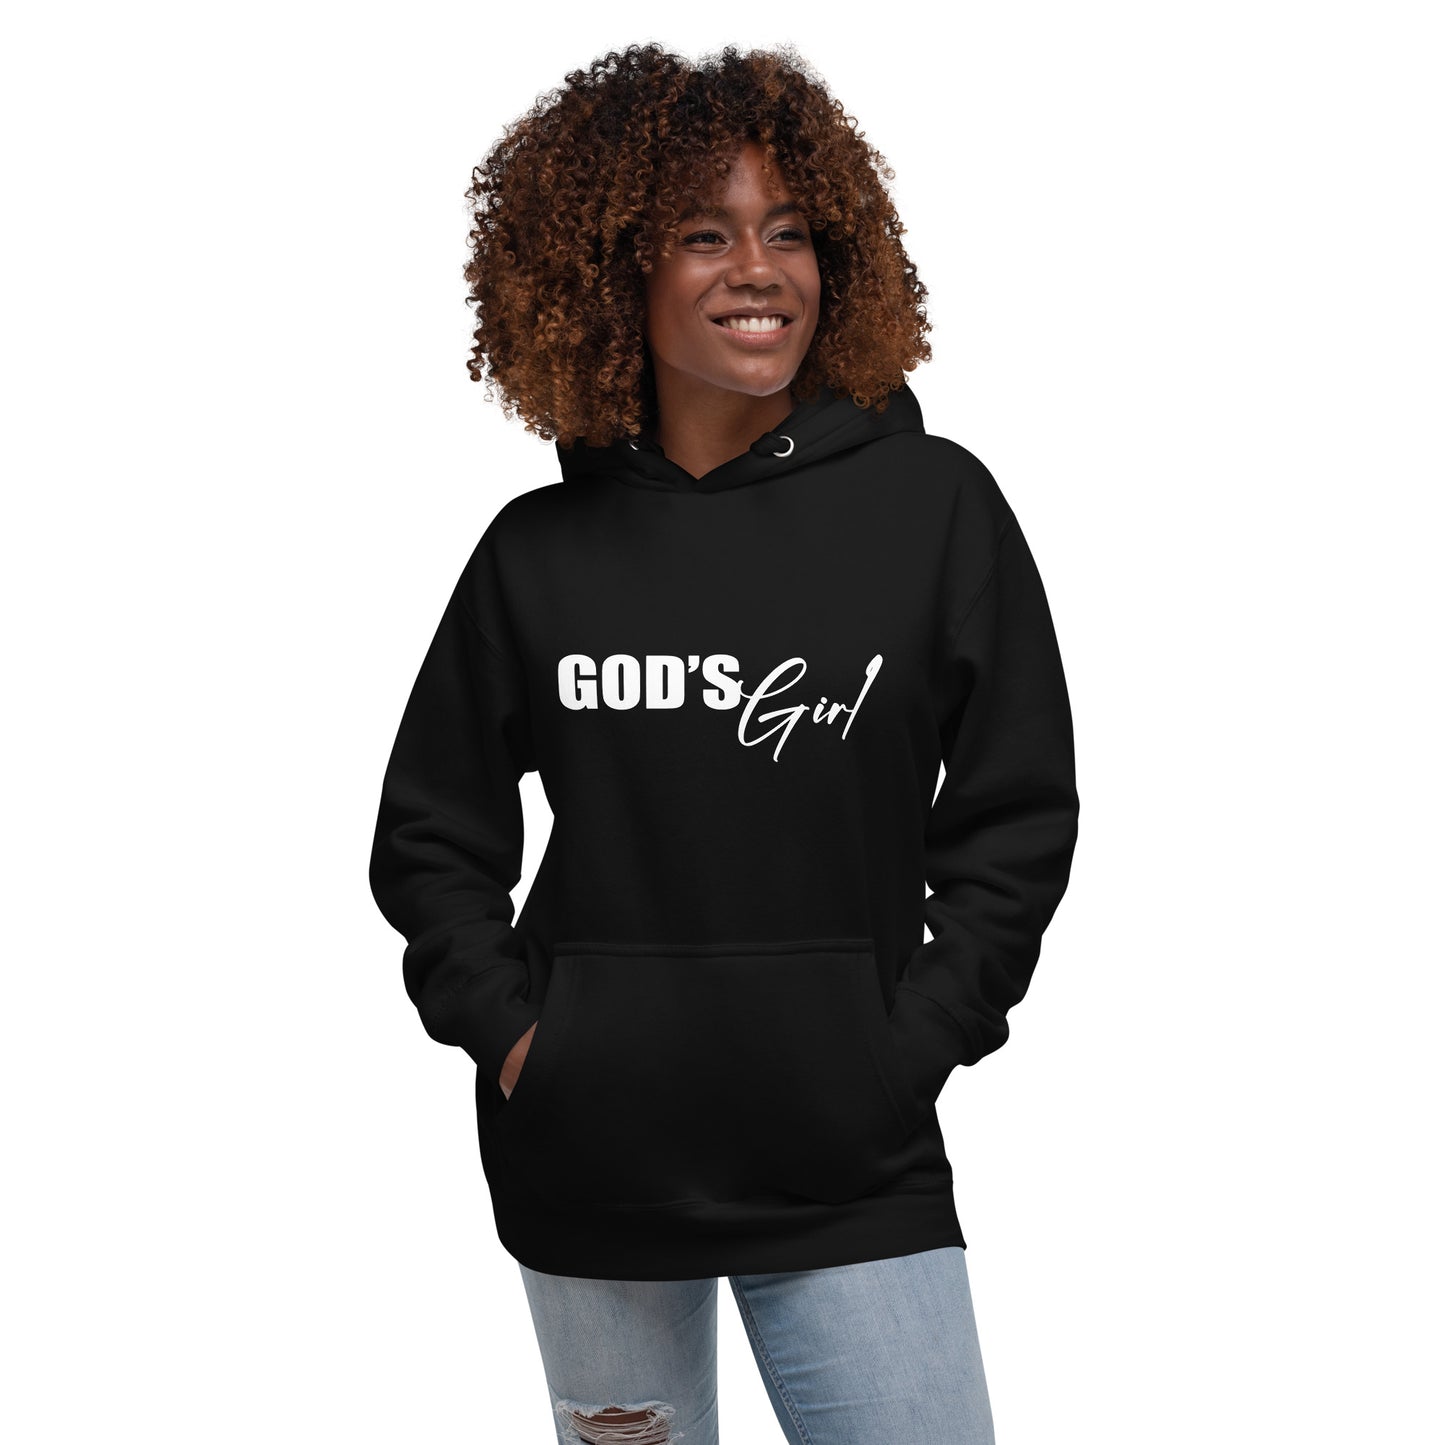 "God's Girl" Hoodie